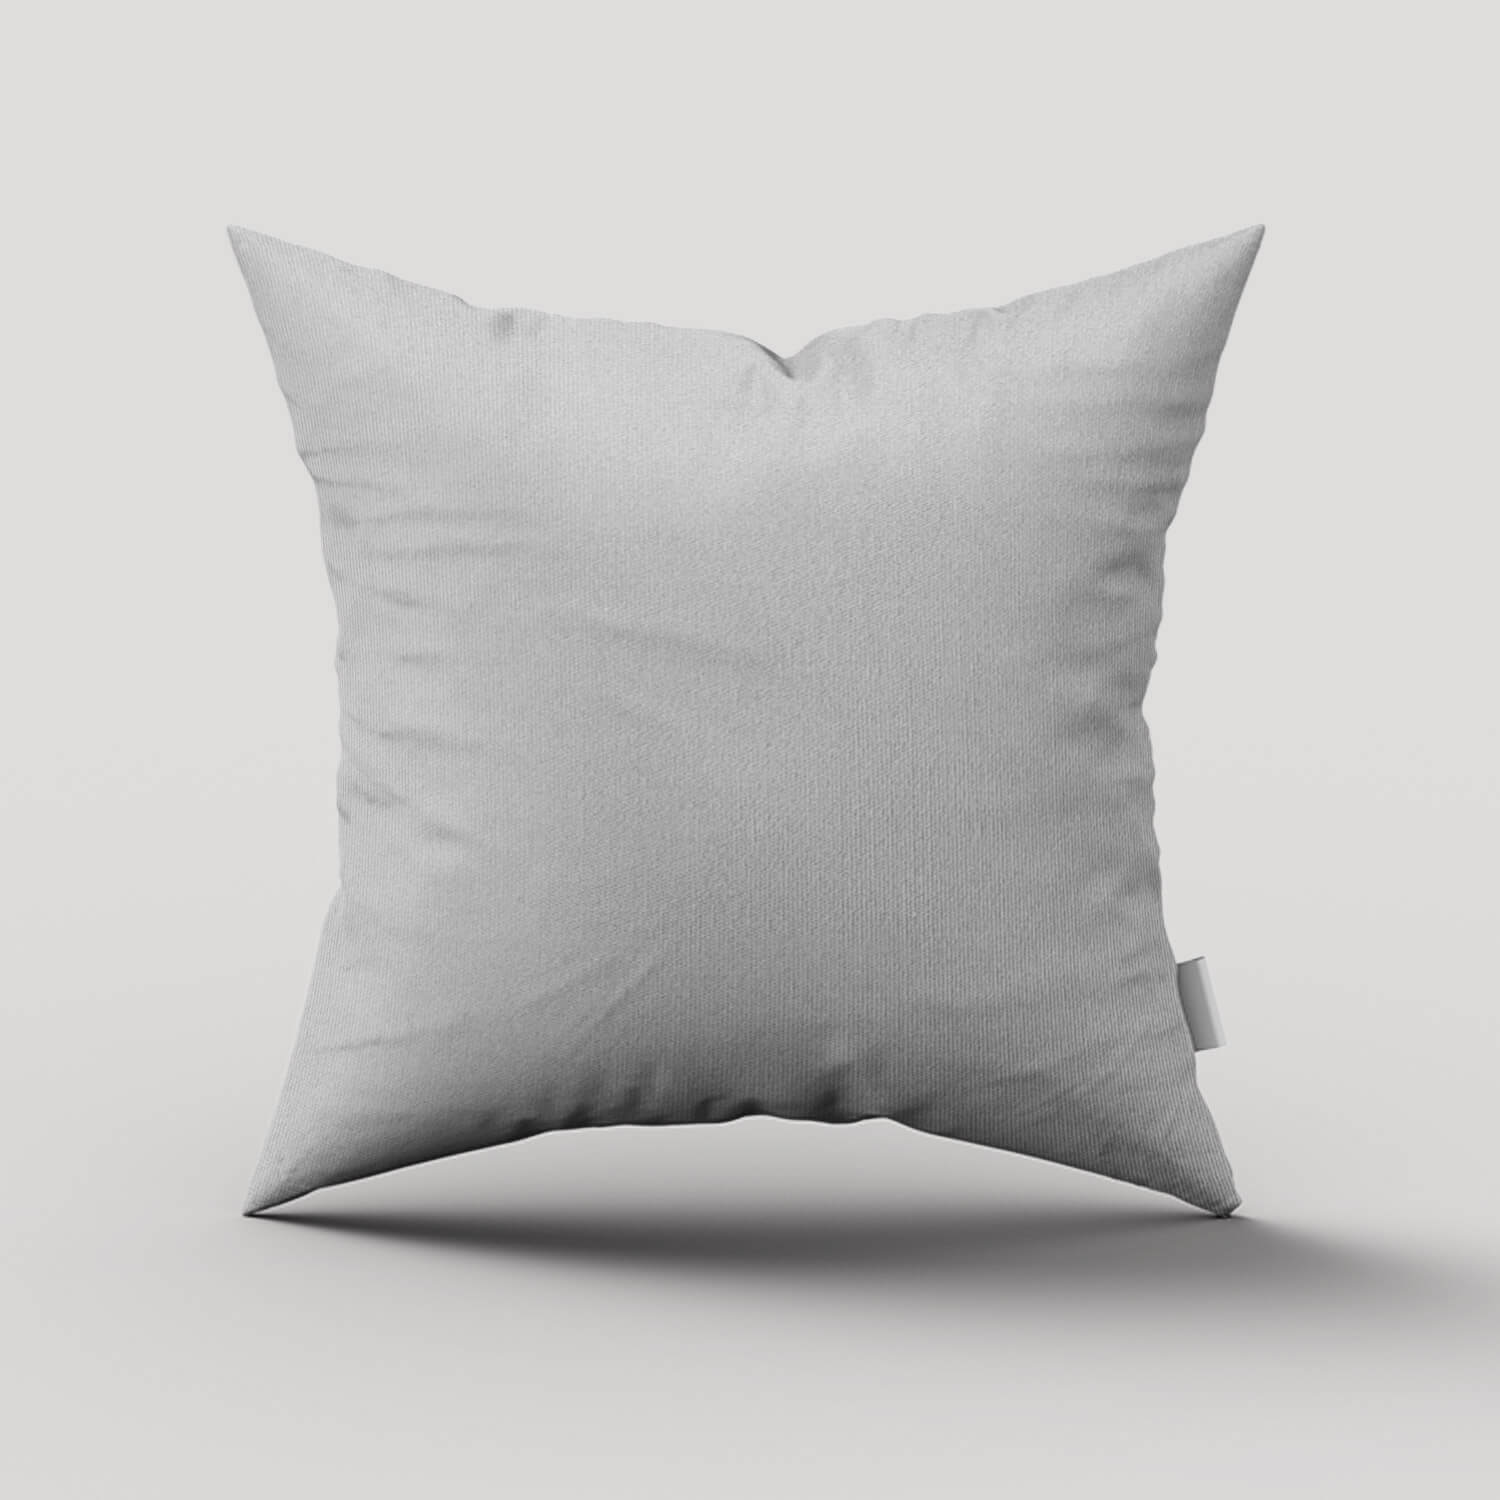 PENGI Waterproof Outdoor Pillow Case 1 Pcs - Pure Misty Gray